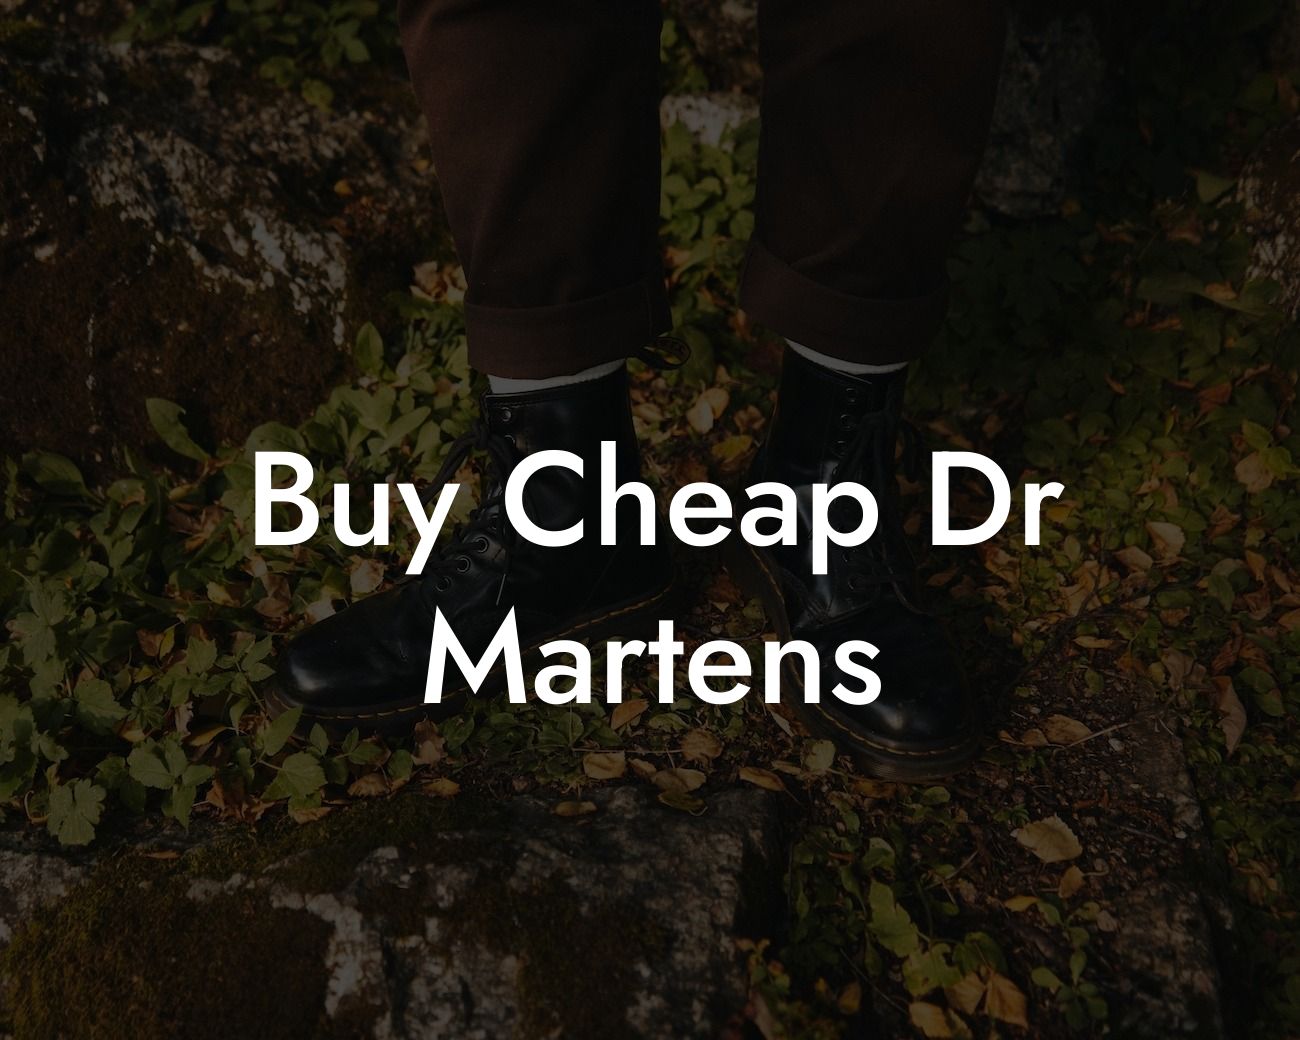 Buy Cheap Dr Martens